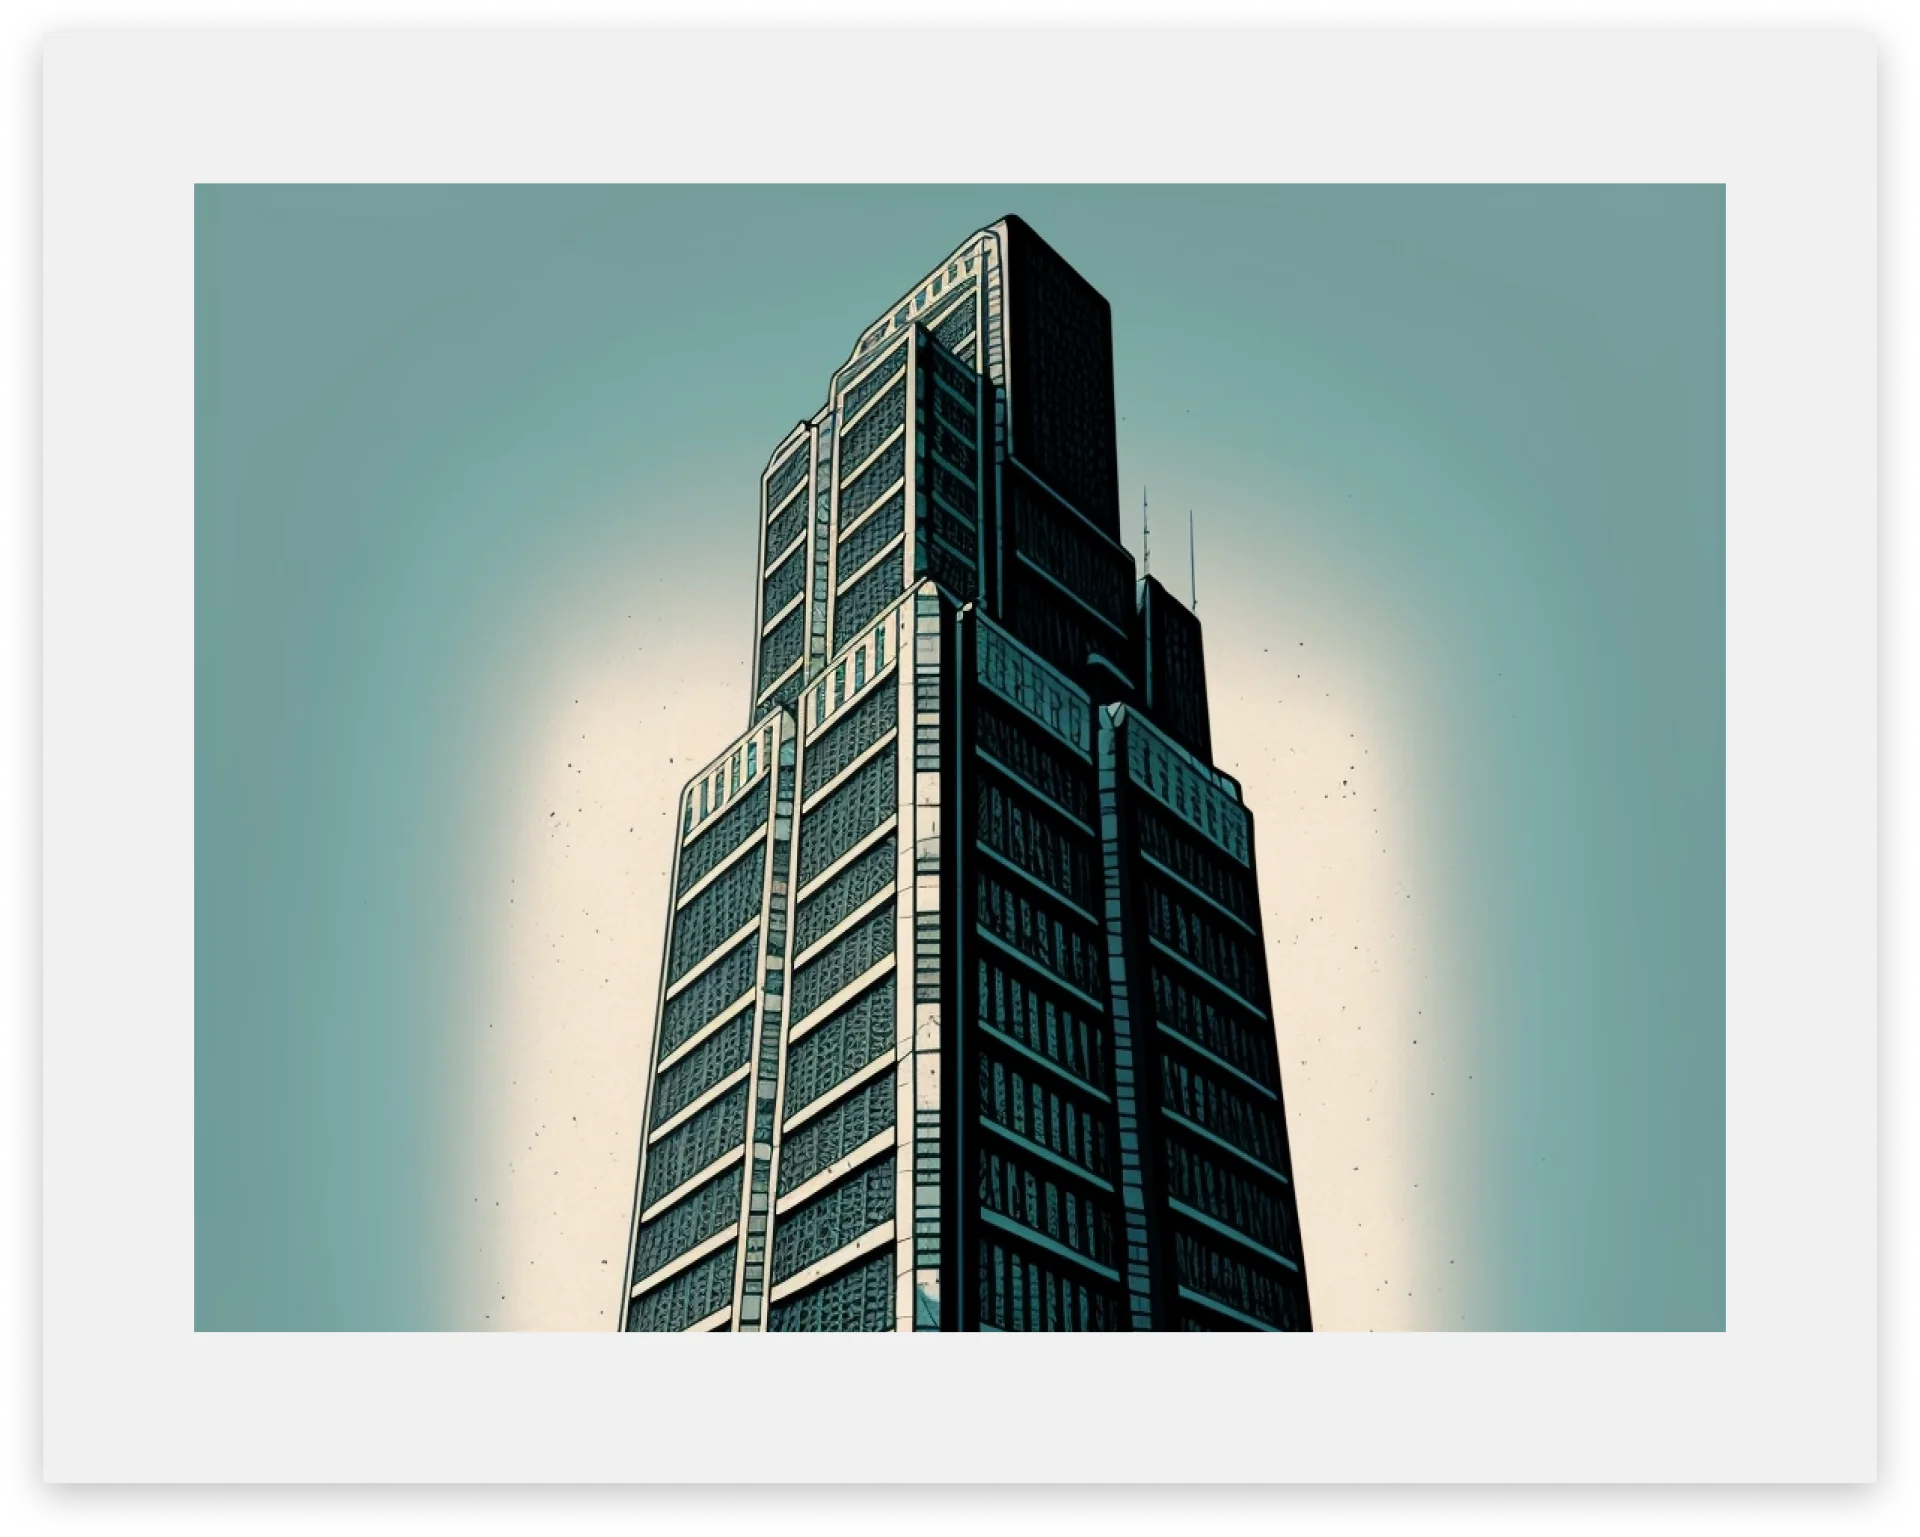 A sketch of a skyscraper